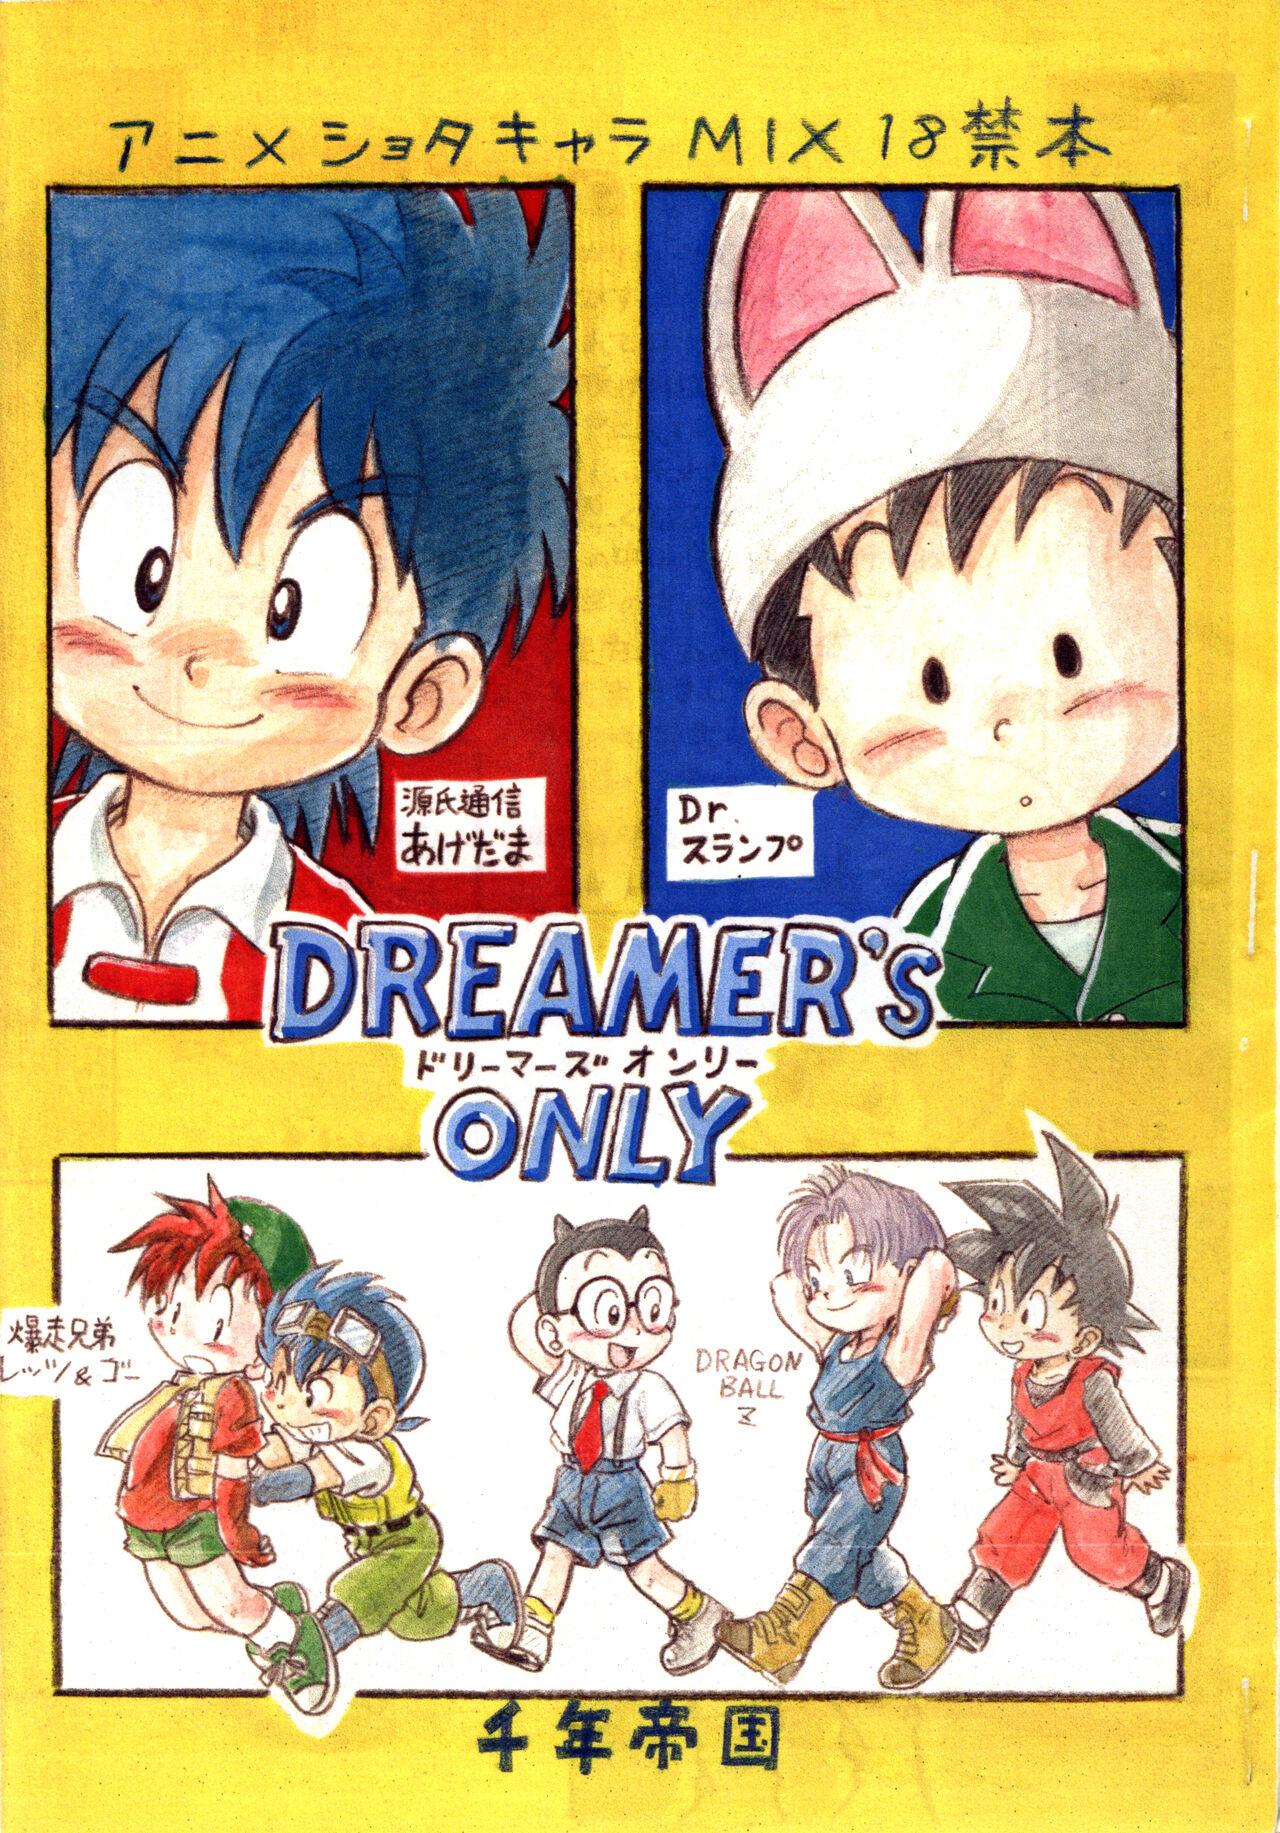 Classic DREAMER’S ONLY - Dragon ball z Bakusou kyoudai lets and go Dr. slump Genji tsuushin agedama Rope - Page 1